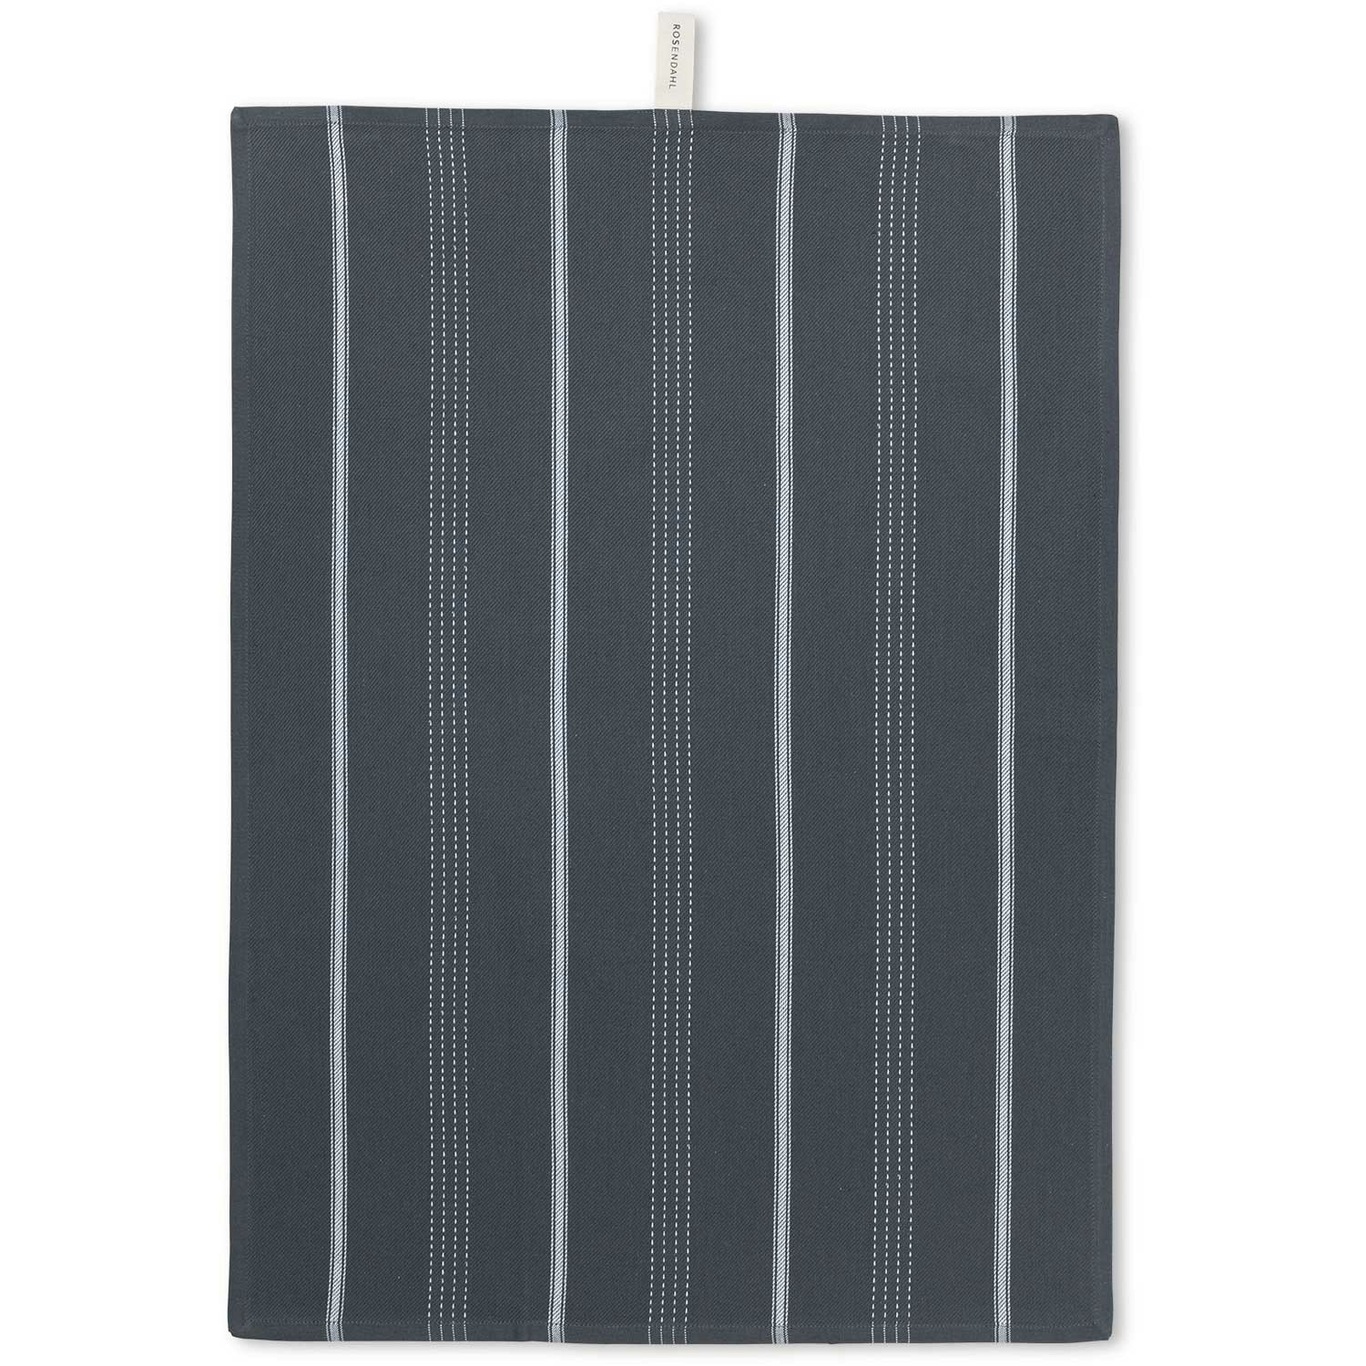 https://royaldesign.com/image/2/rosendahl-copenhagen-beta-kitchen-towel-50x70-cm-sand-7?w=800&quality=80